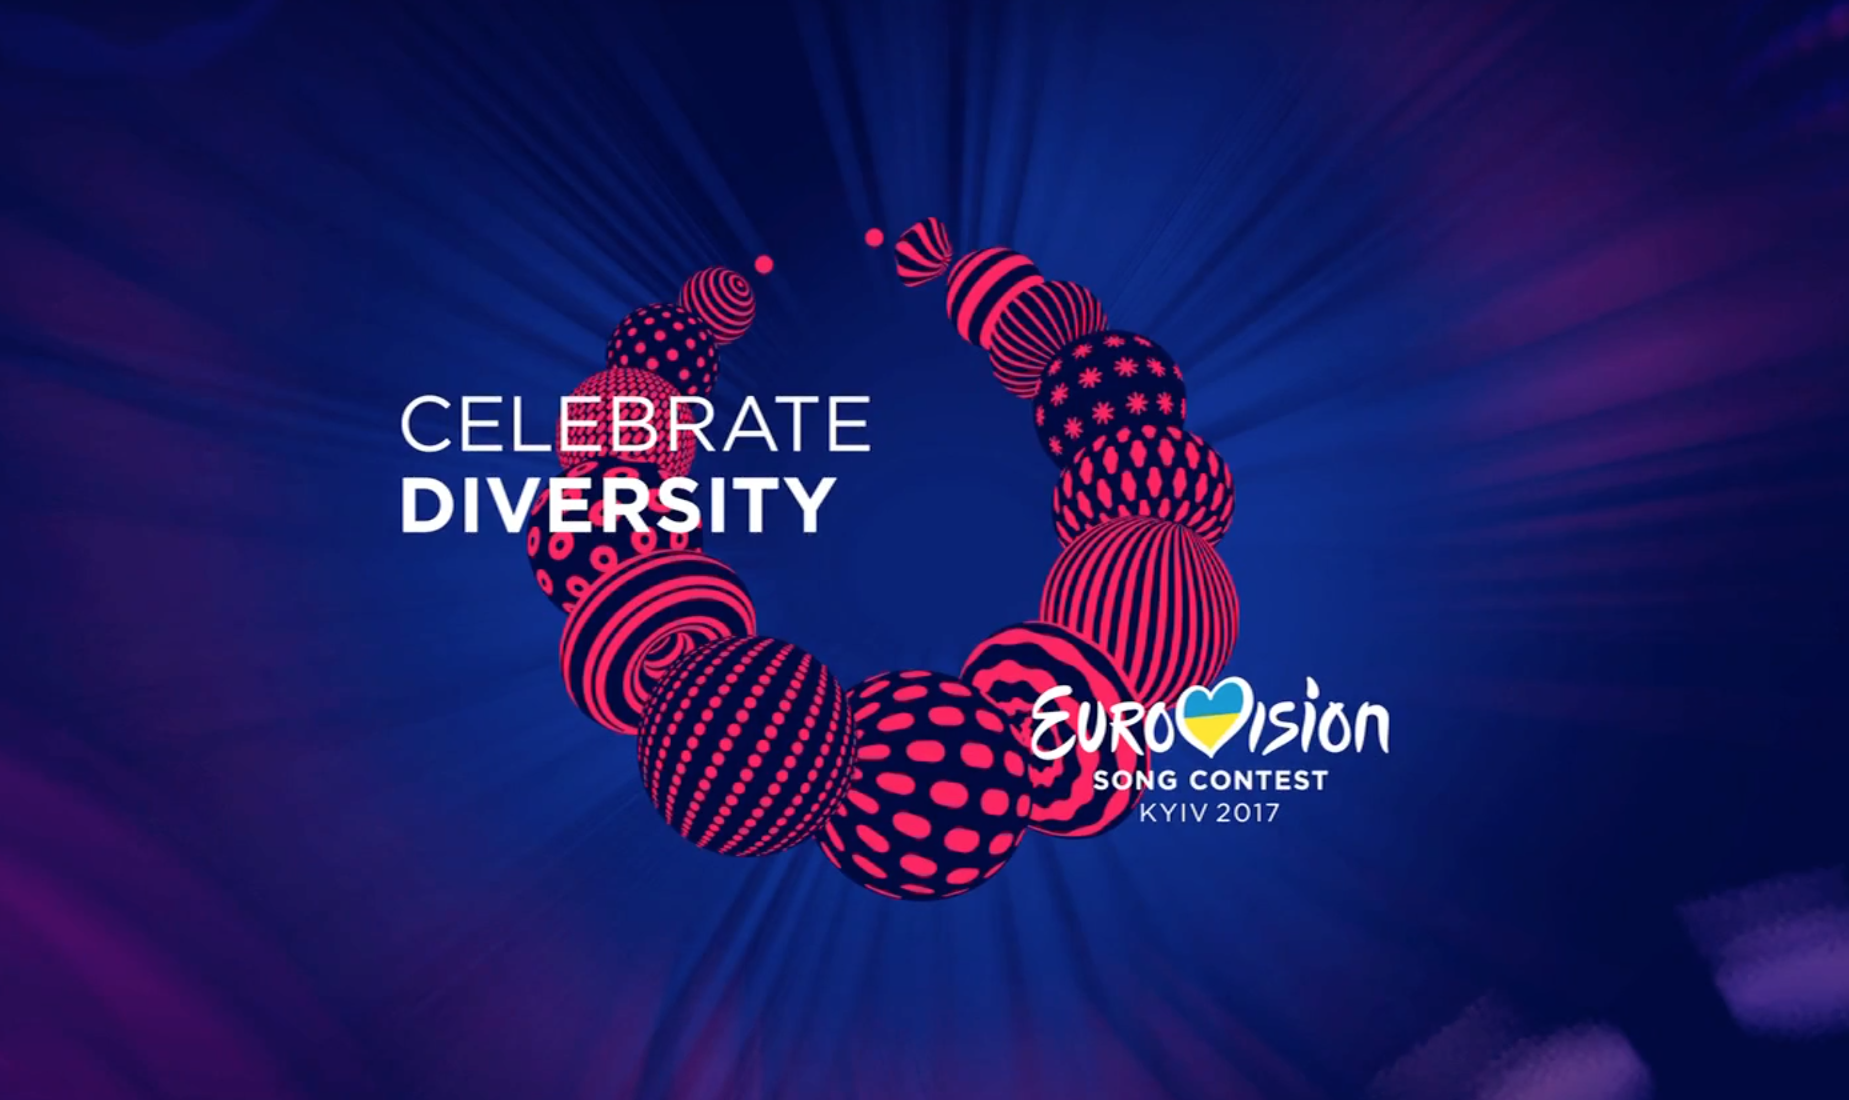 Eurovision 2017 to “Celebrate Diversity”, slogan and visual identity revealed!